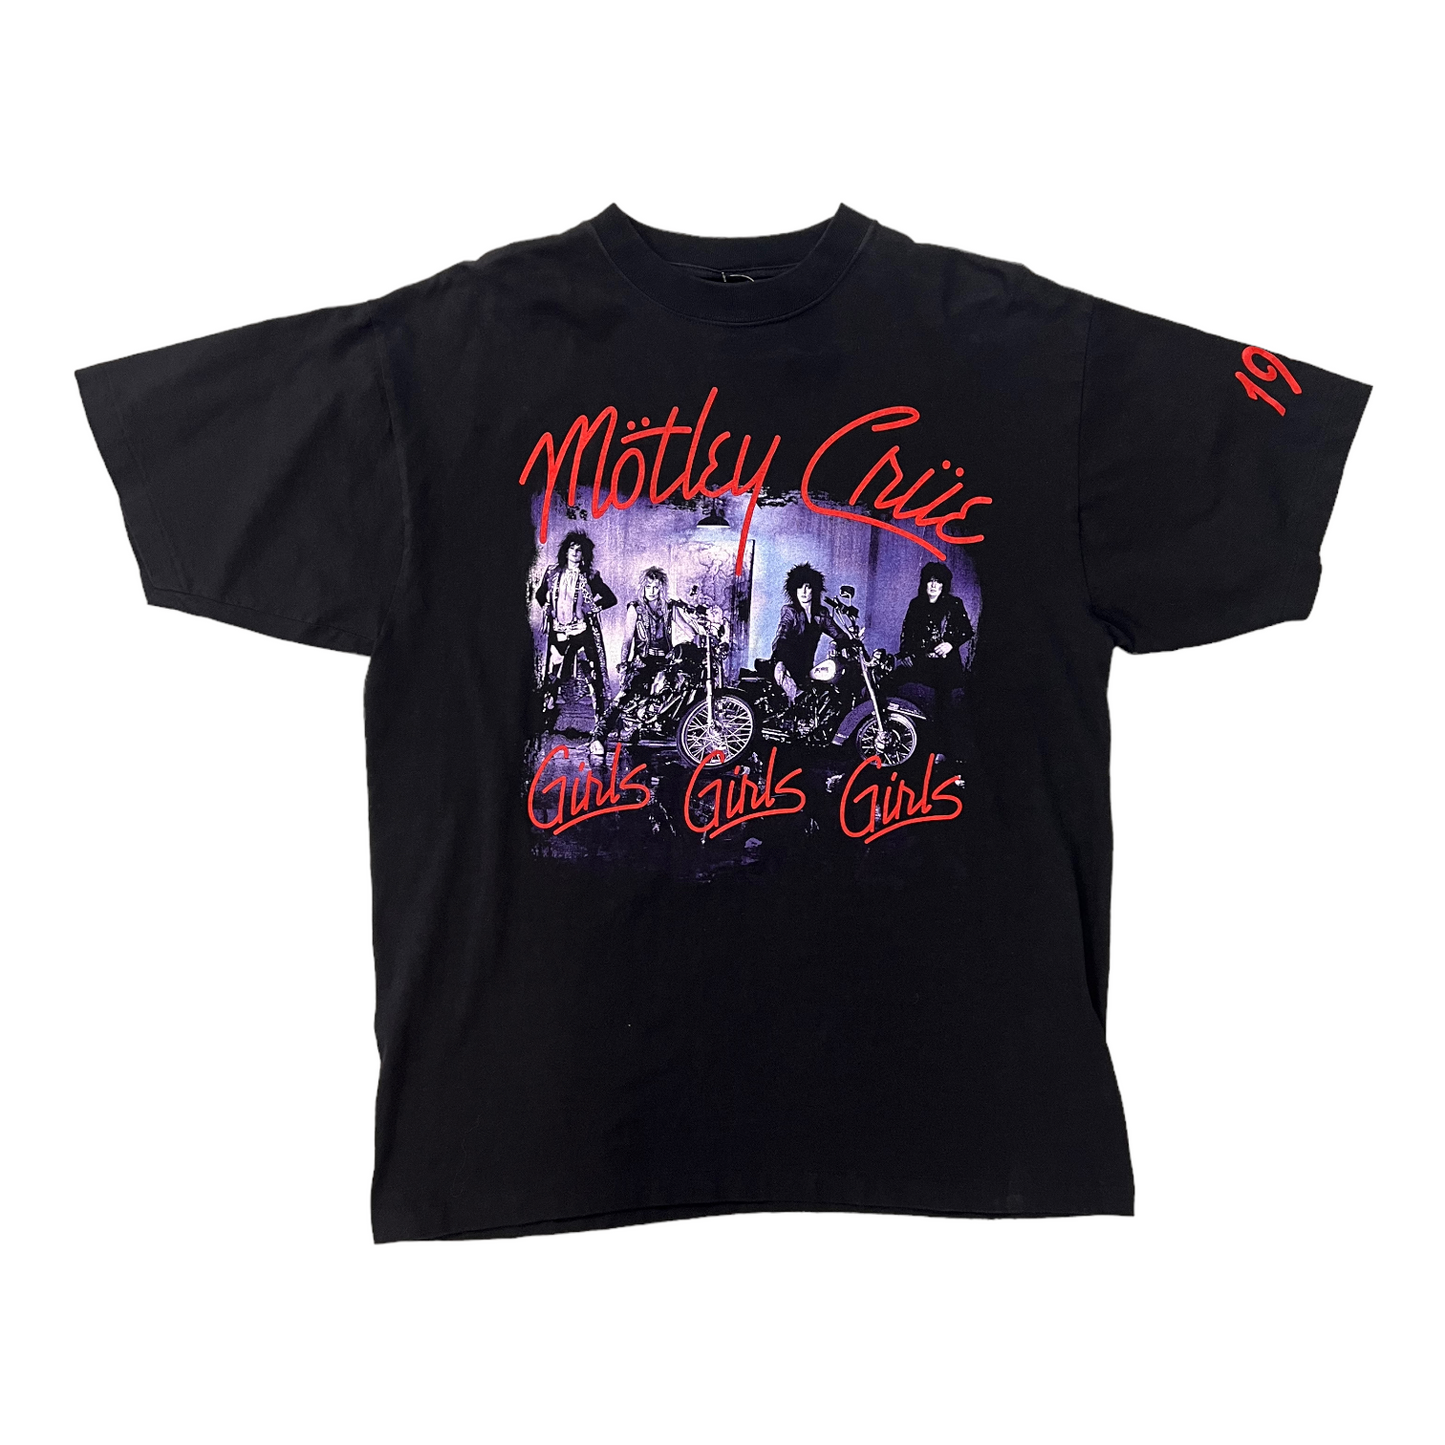 1987 Motley Crue “Girls, Girls, Girls” vintage tour tee